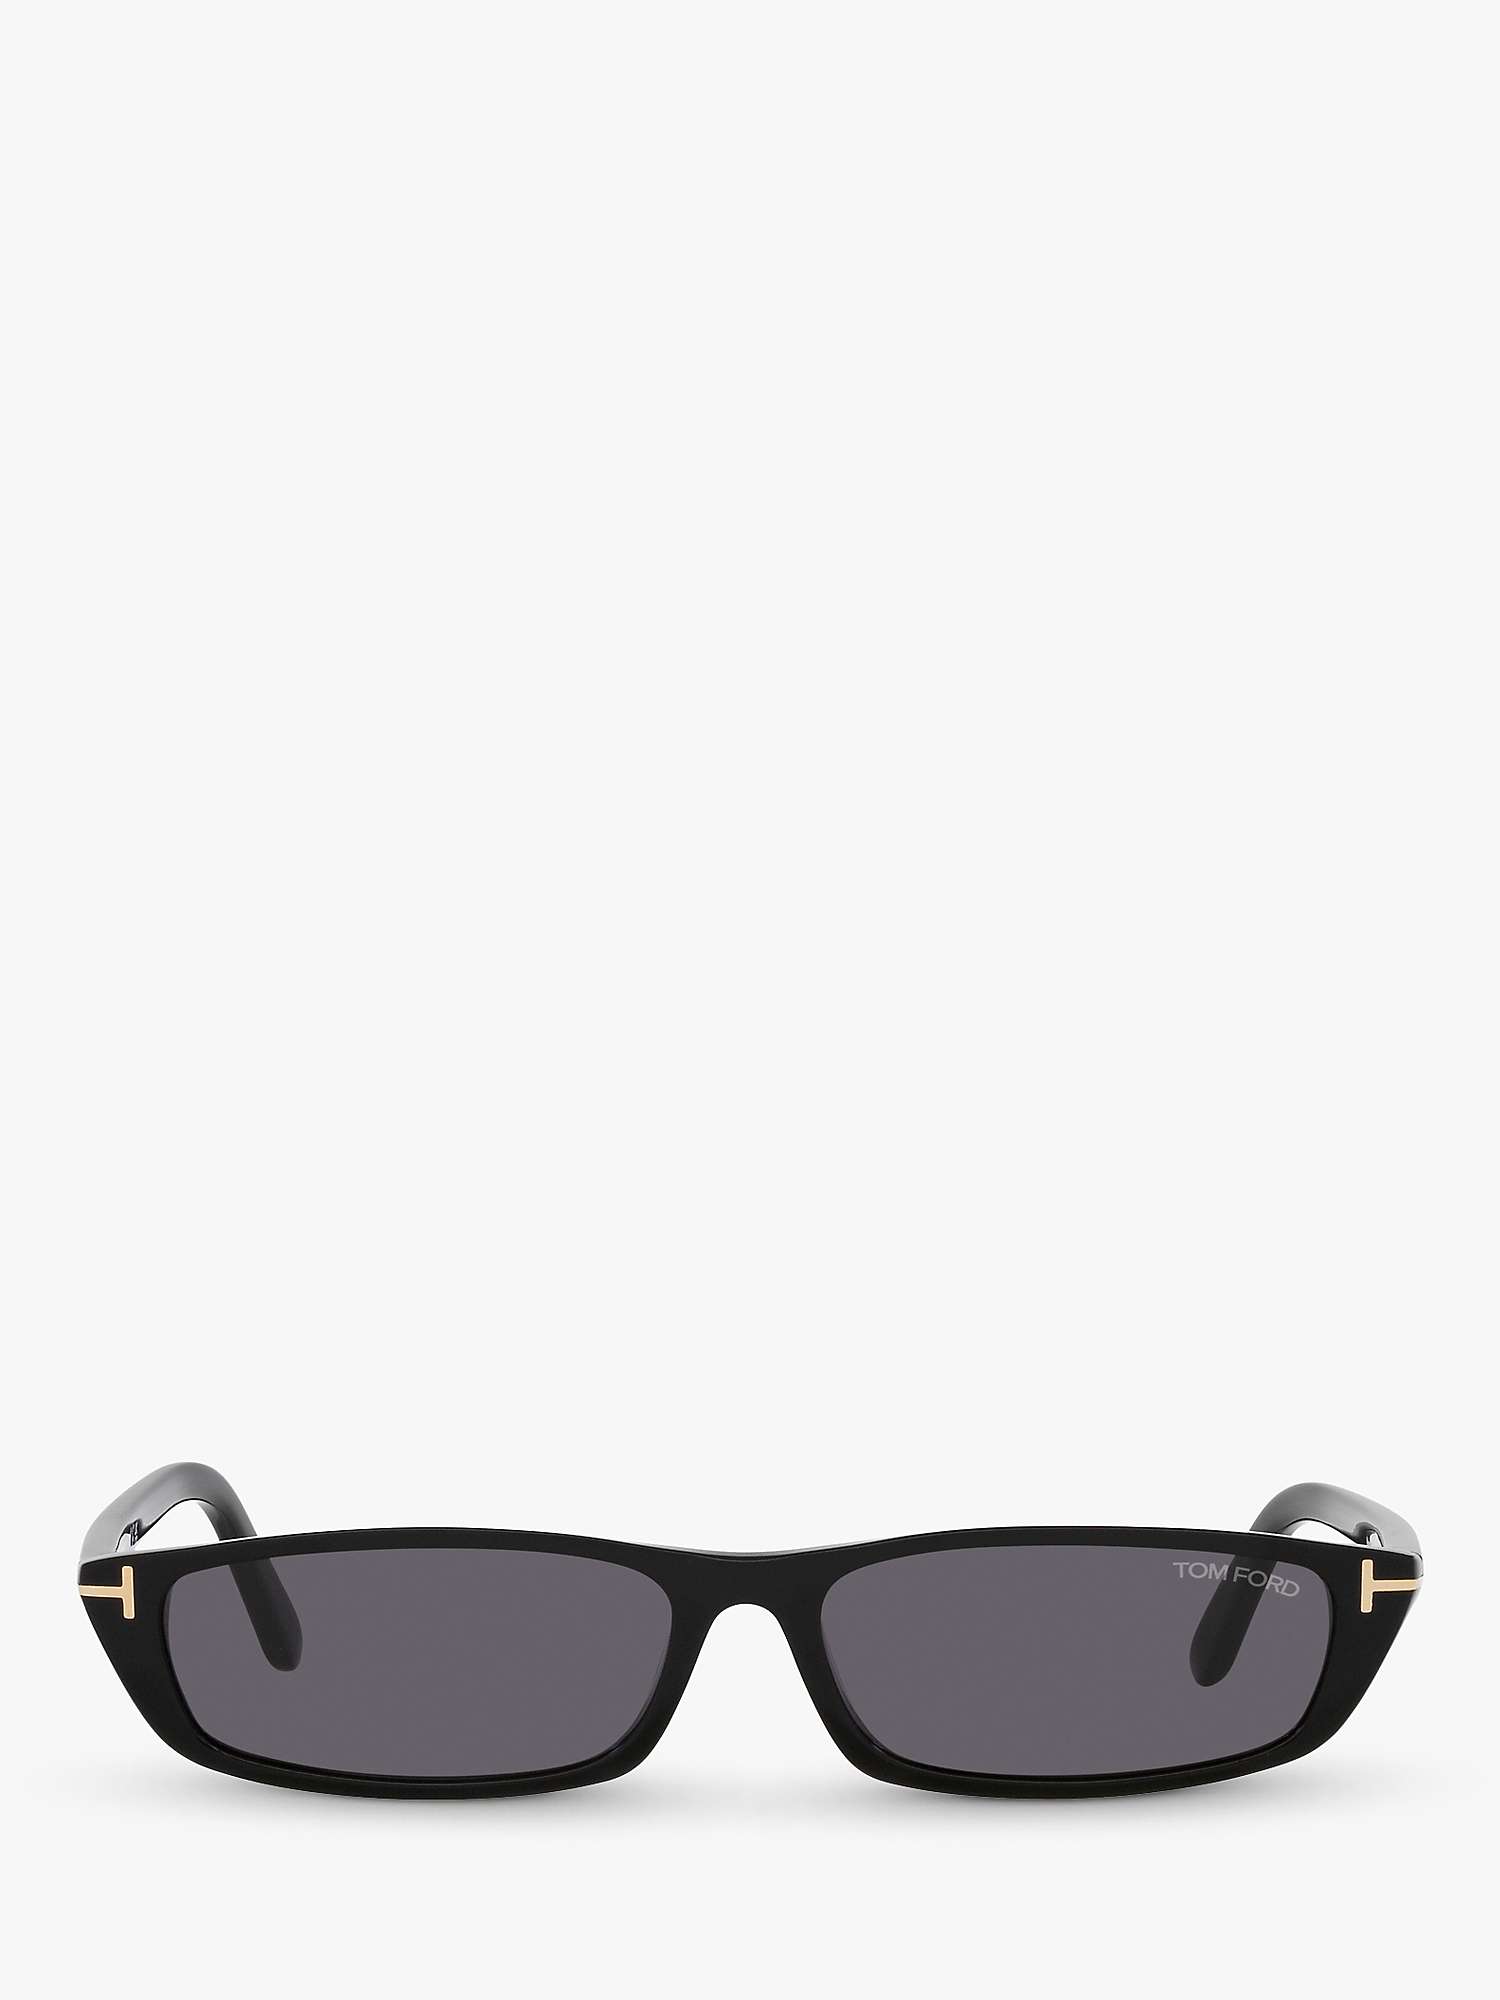 Buy TOM FORD TR001673 Unisex Rectangular Sunglasses, Black Online at johnlewis.com